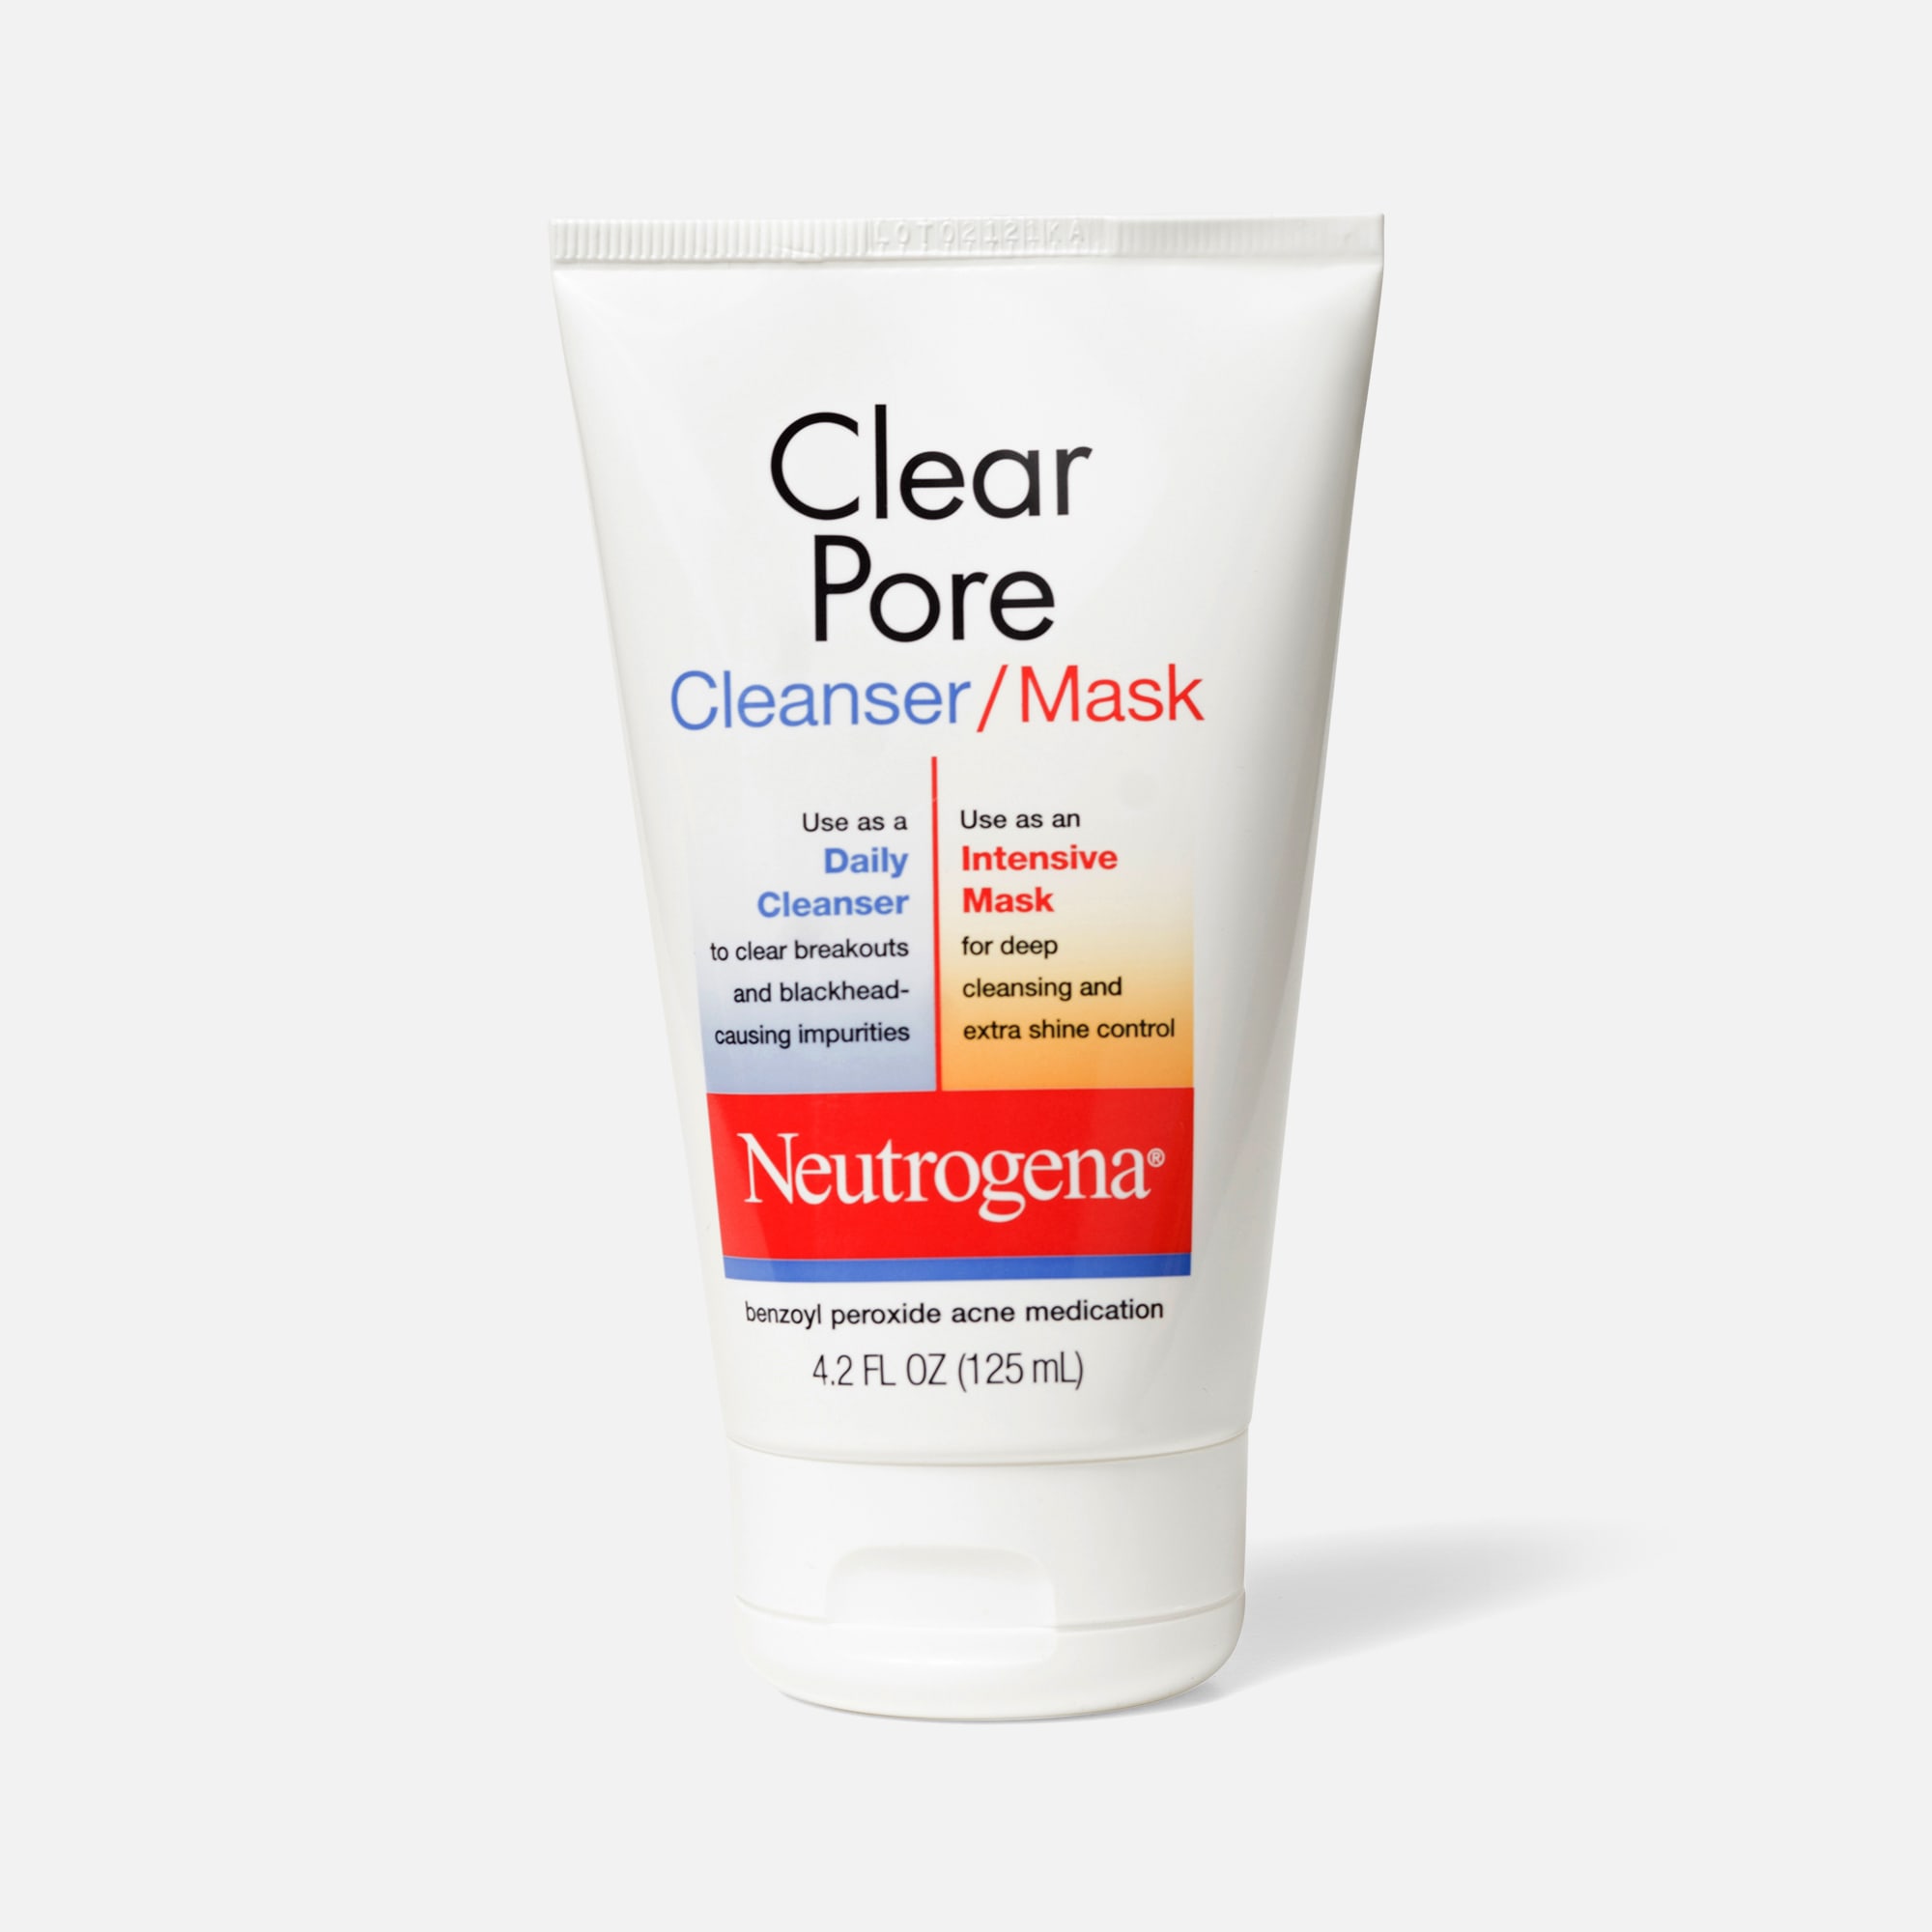 Neutrogena Clear Pore Cleanser / Mask,